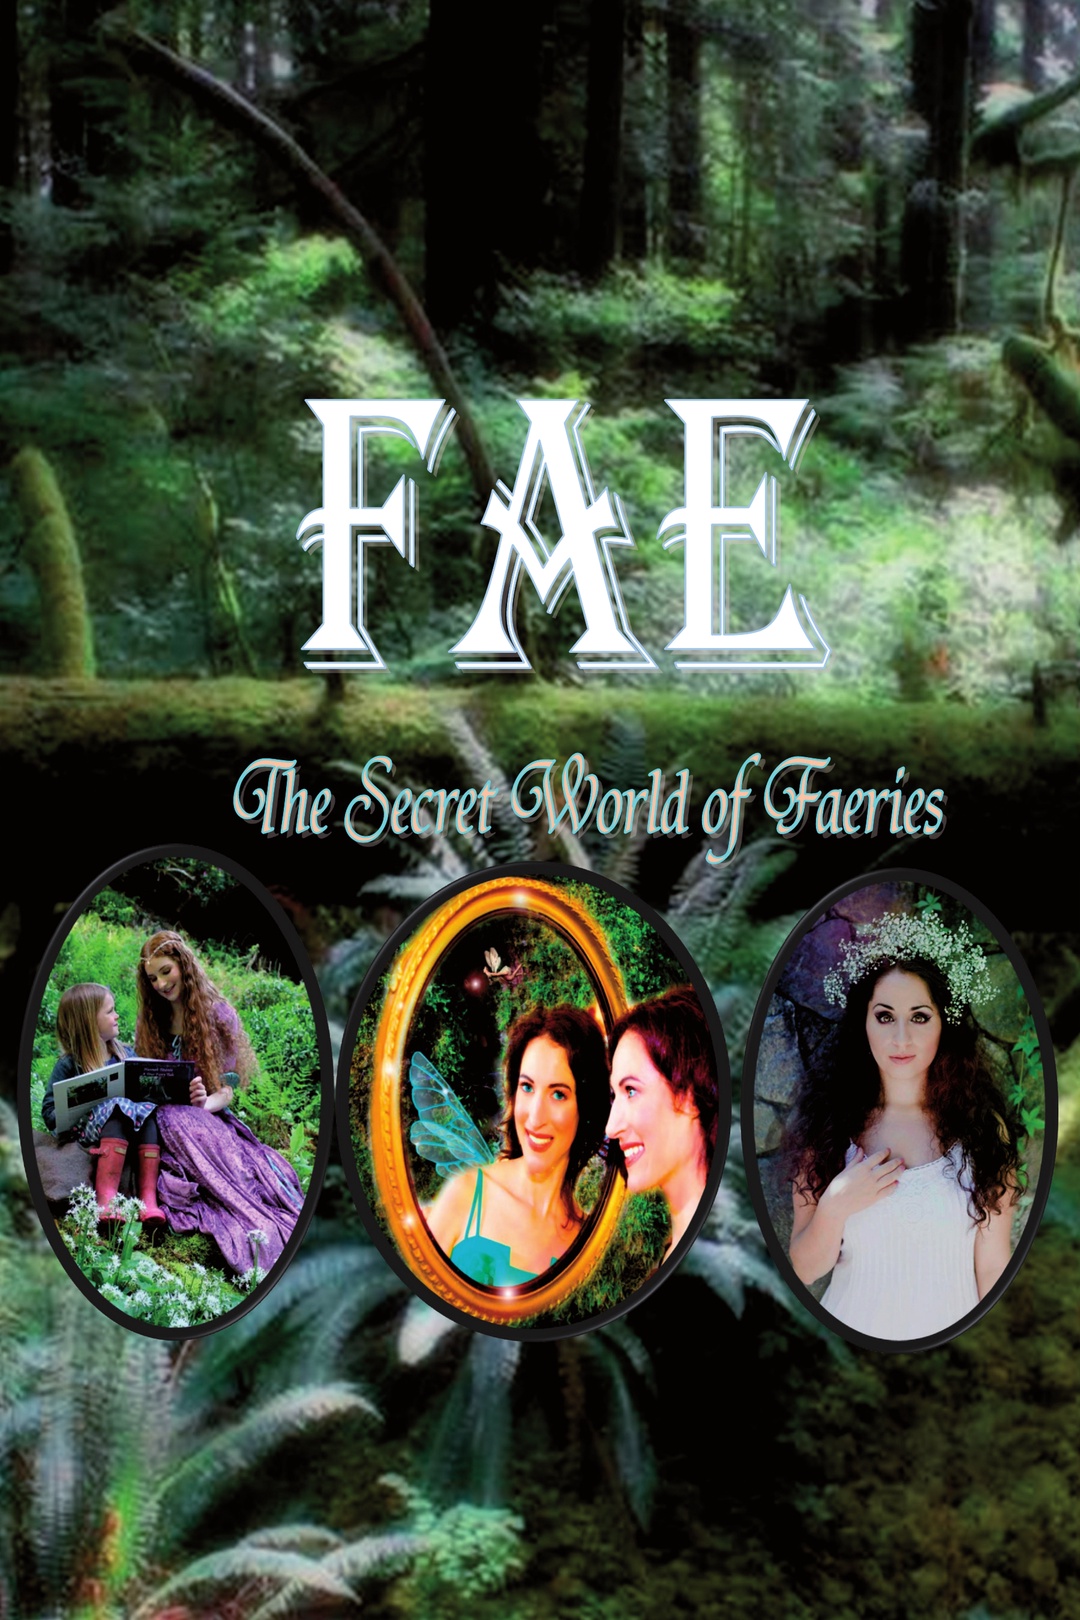 King Arthur's Legends of Morgana La Fay & Stonehenge